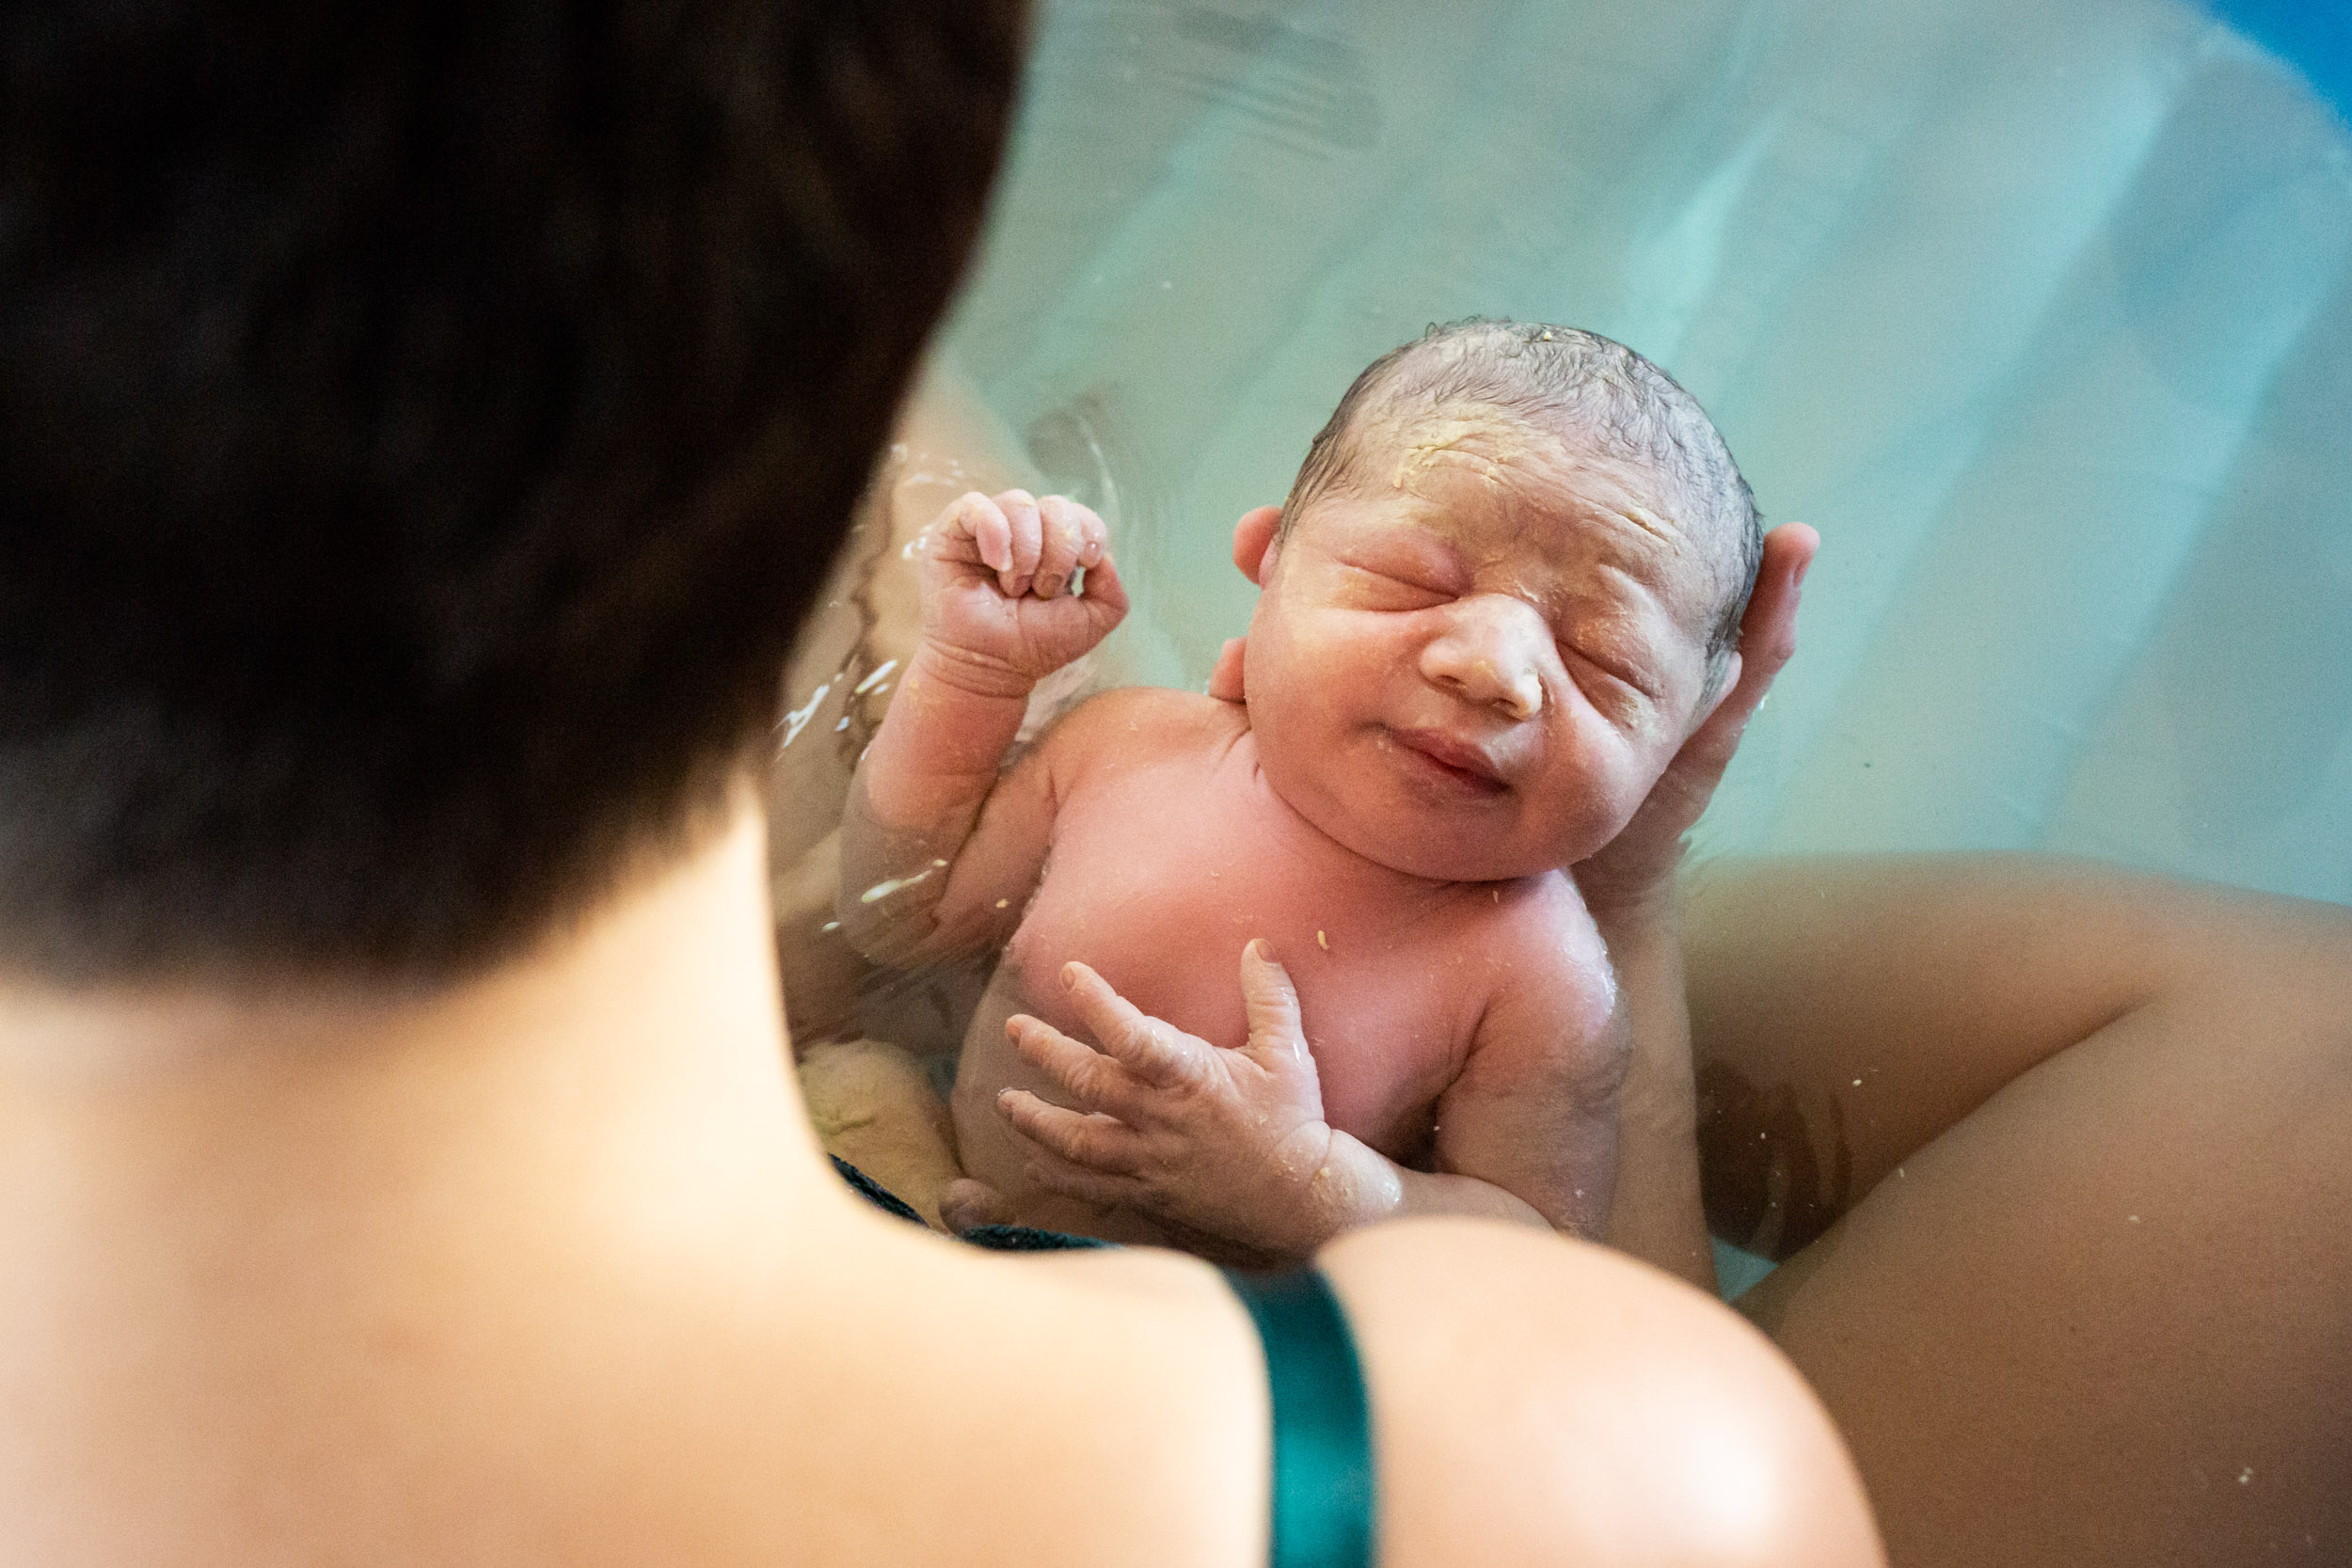 newborn baby in tub